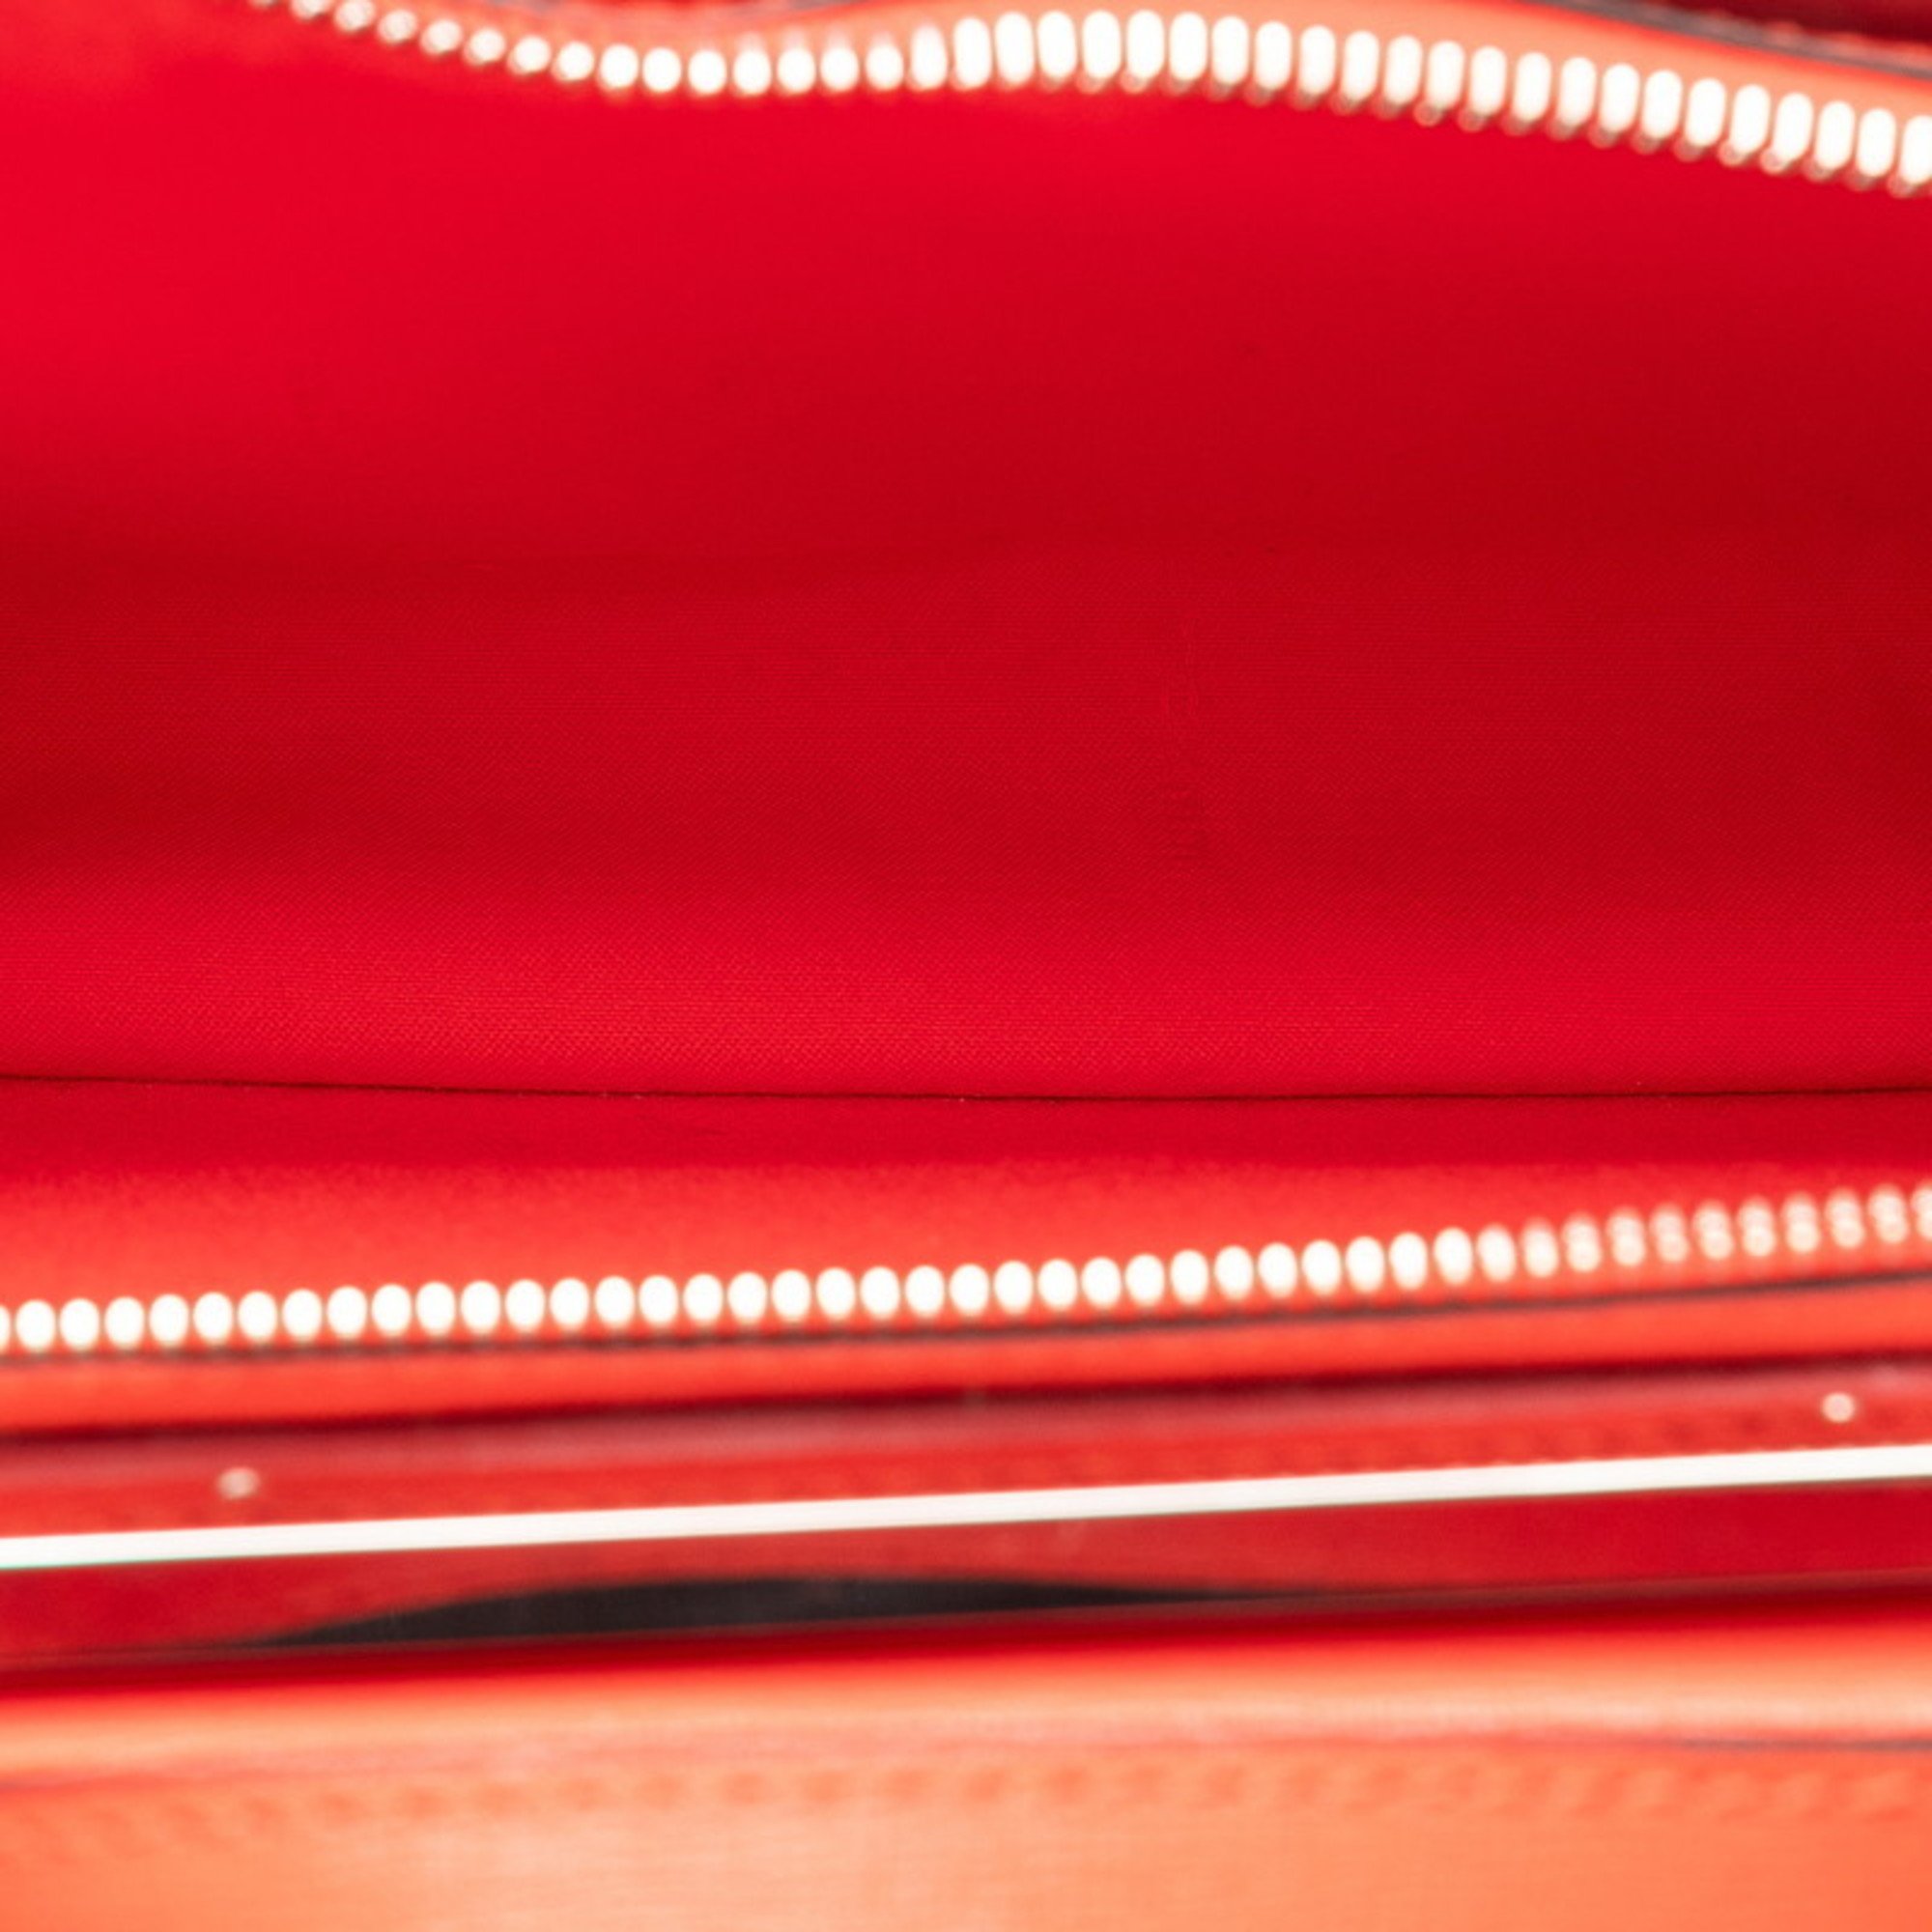 Fendi Demi Jour Handbag Shoulder Bag 8BT222 Orange Red Silver Leather Women's FENDI